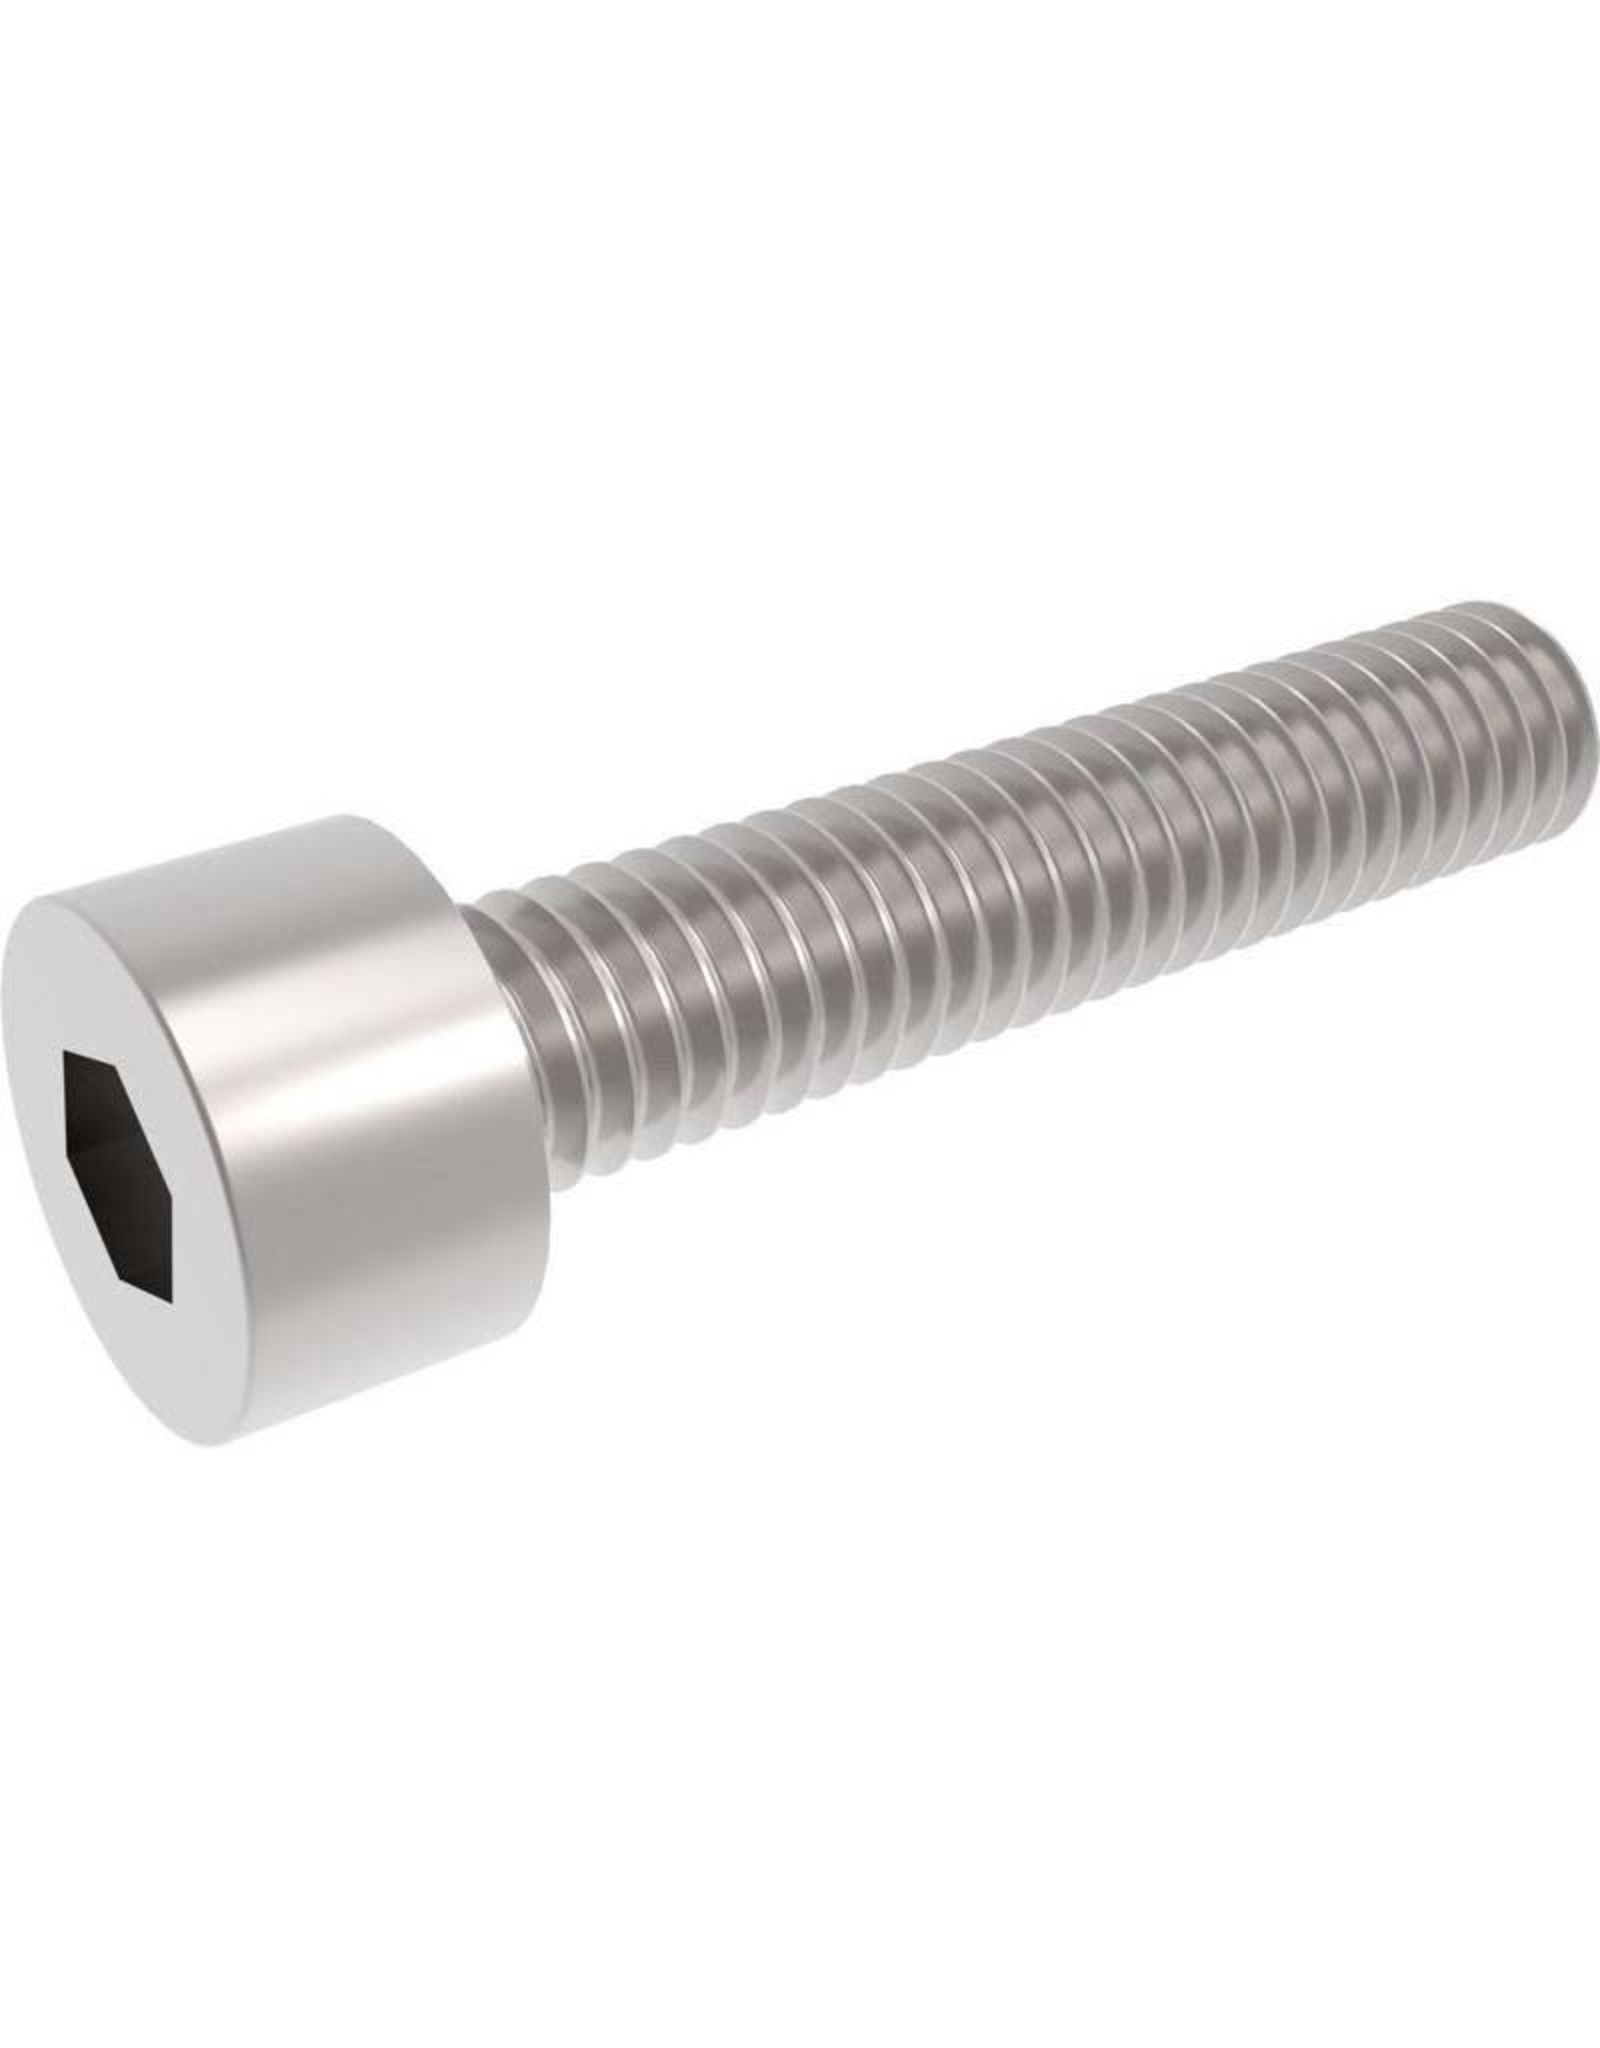 Steel Socket Cap Metric Screws M3 x 10mm  (Pak of 2)